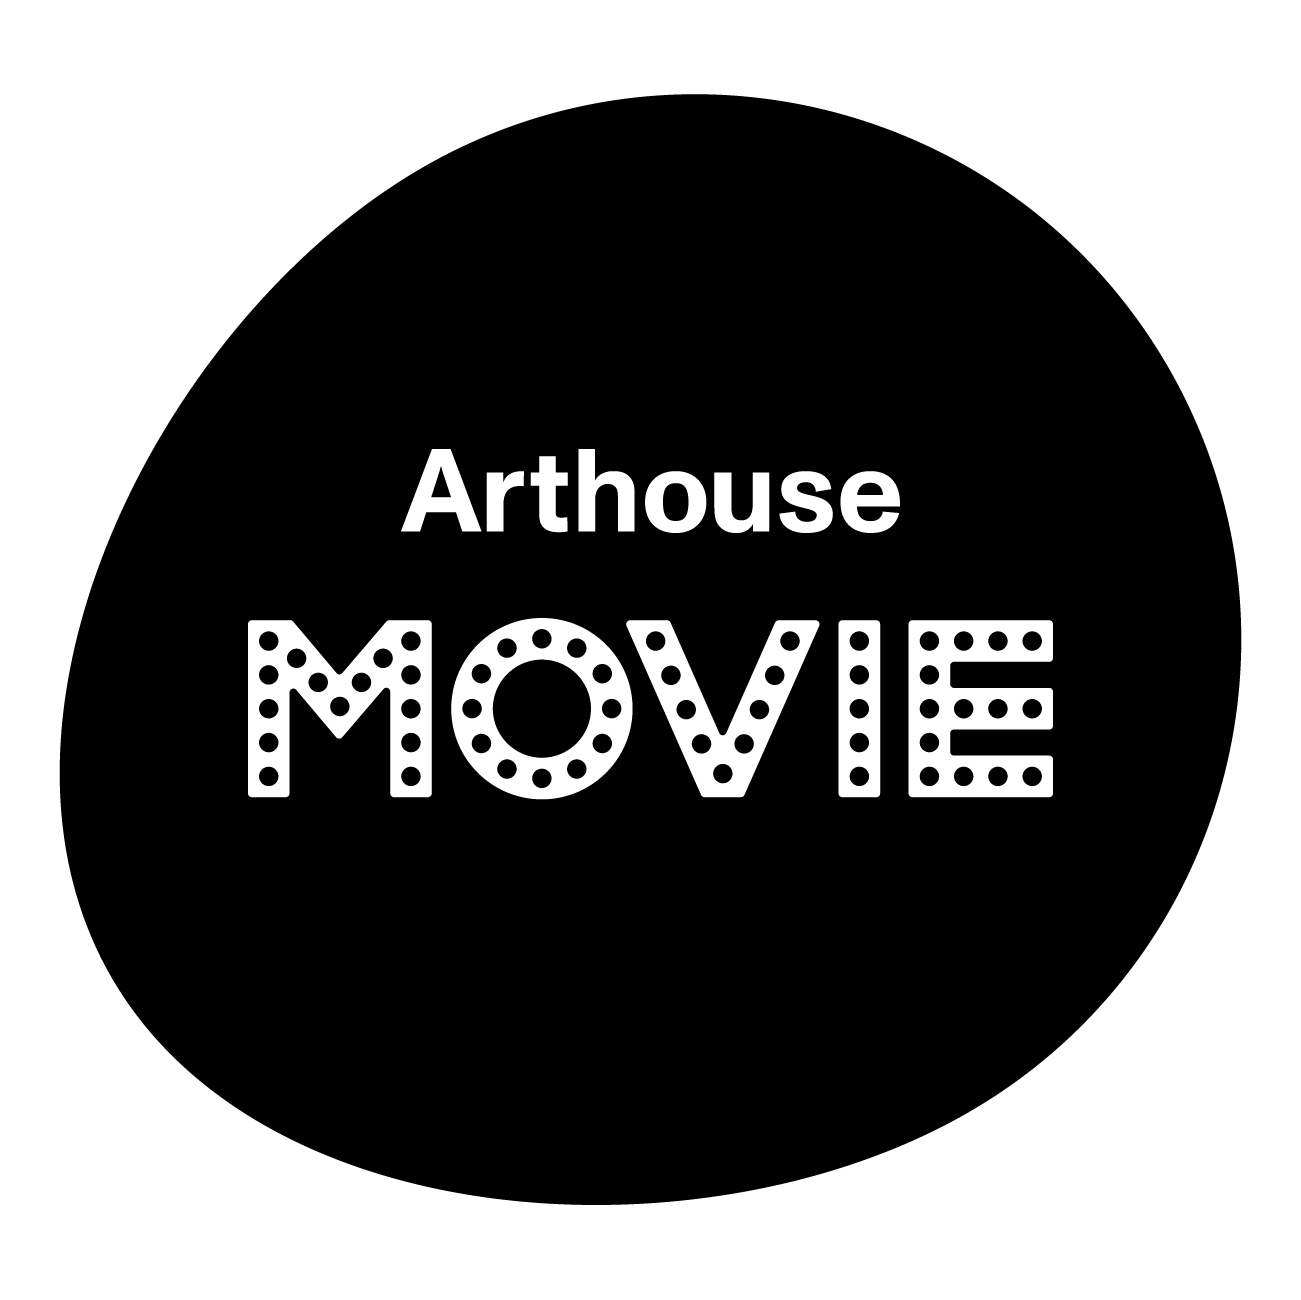 arthouse movie production companies